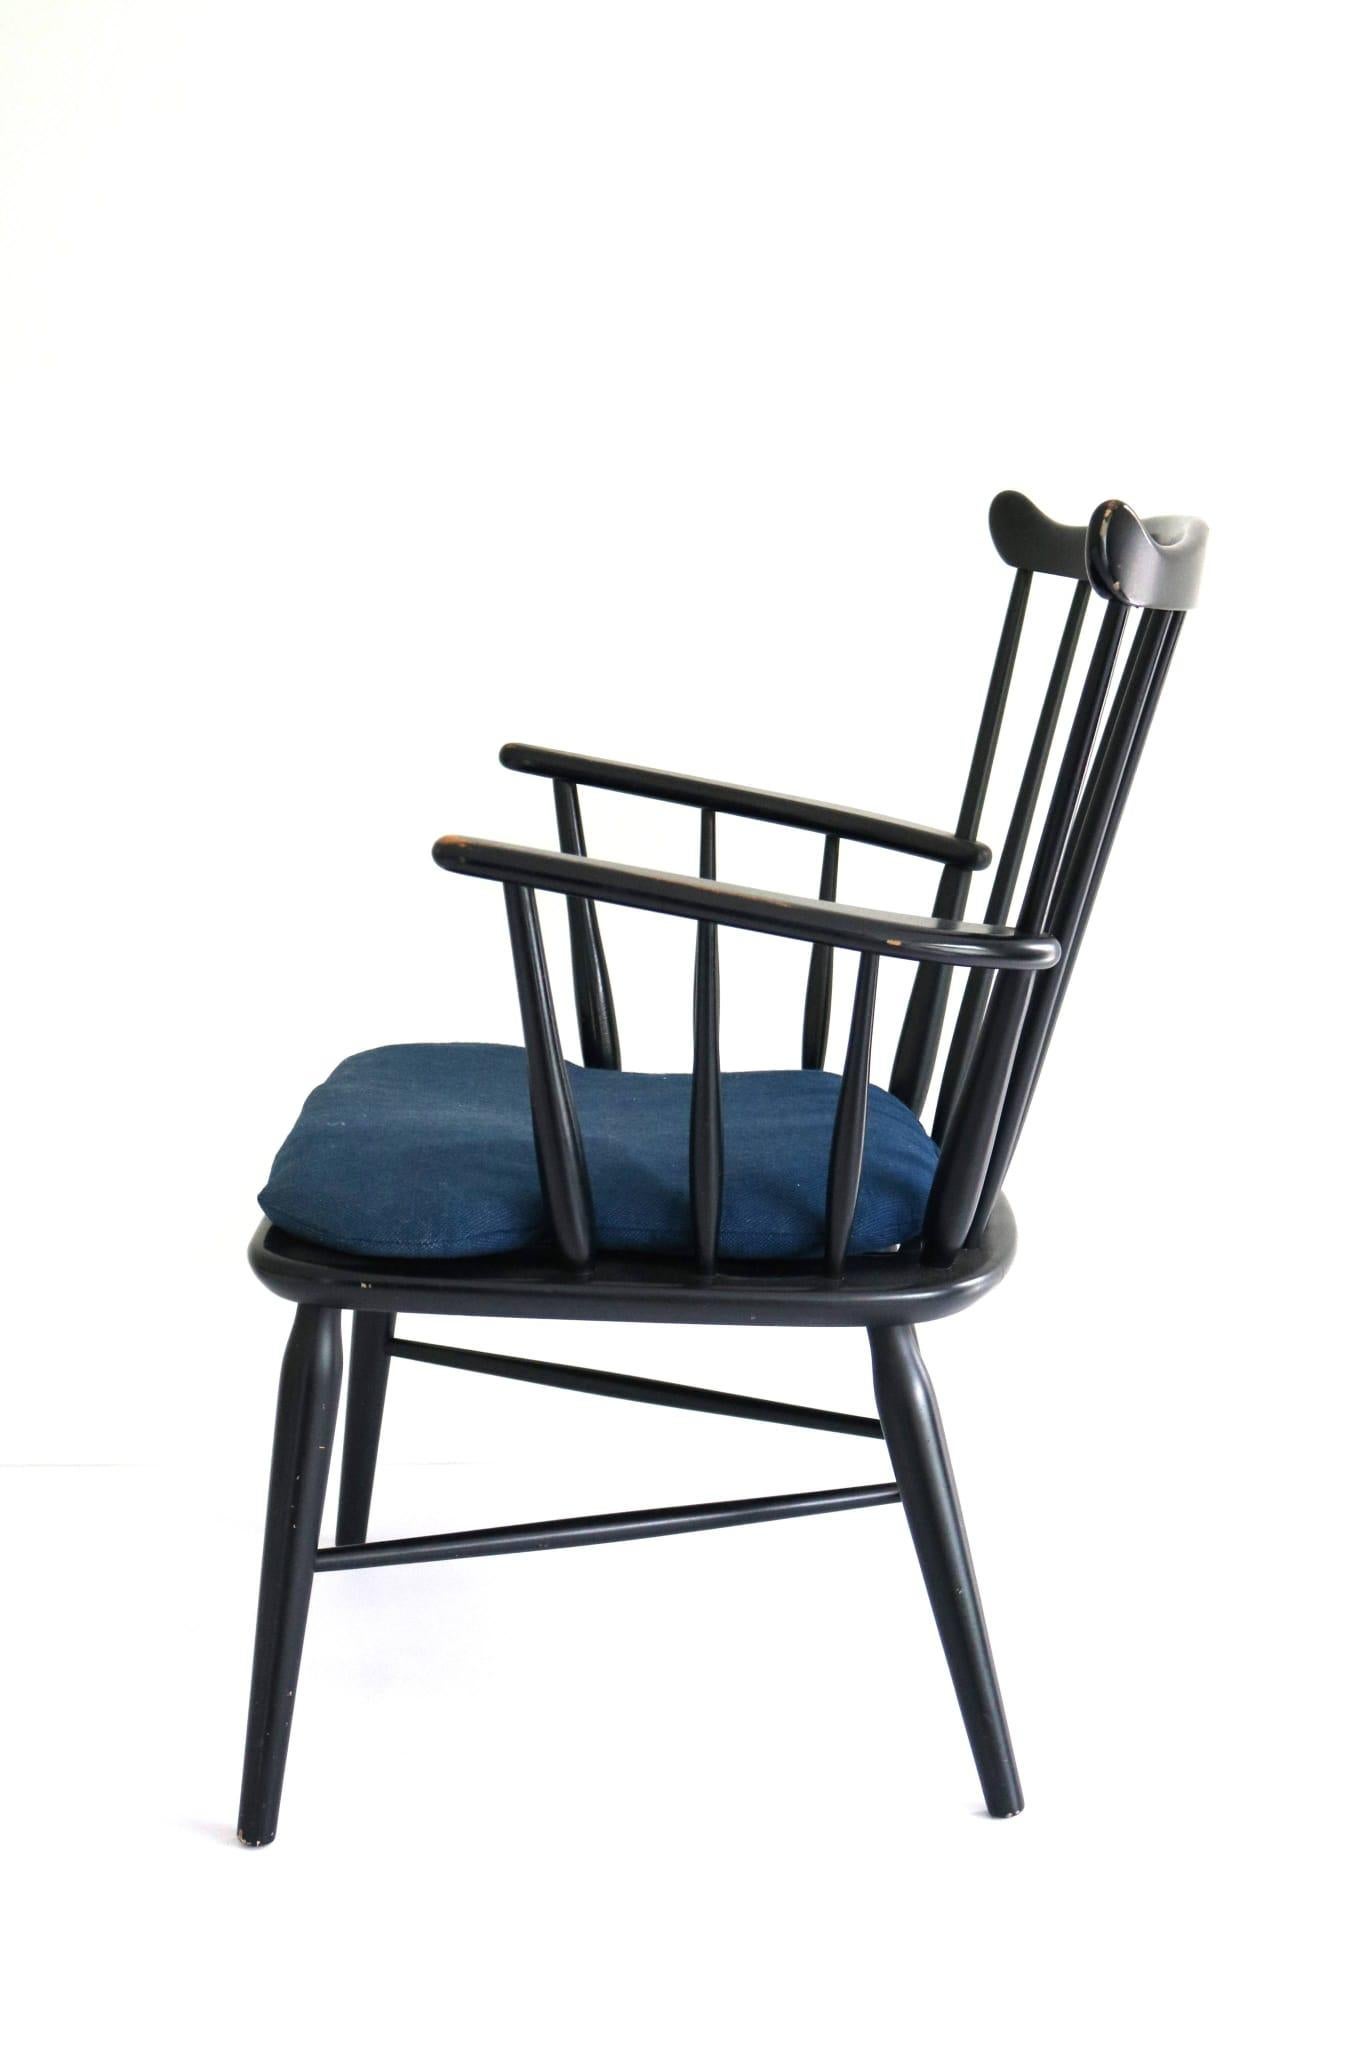 Mid-20th Century armchair by Thomas Harlev for Farstrup møbler, Denmark, 1960's